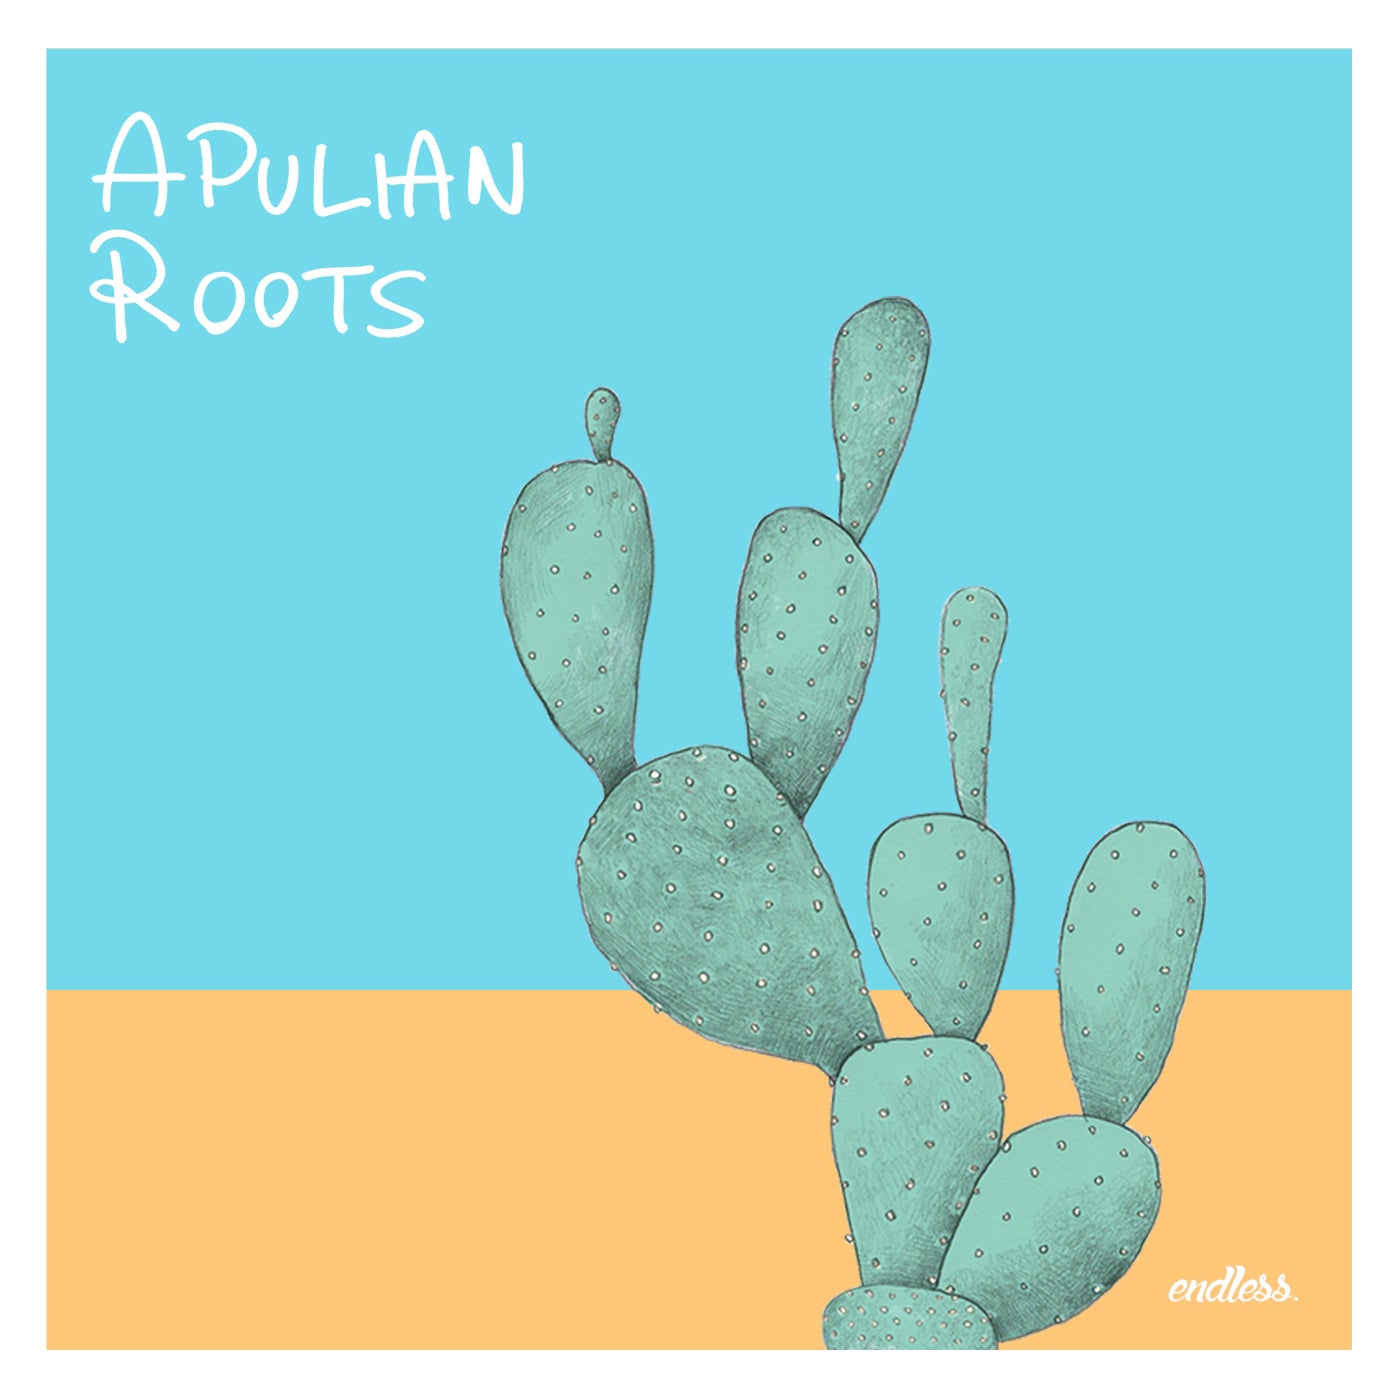 Apulian Roots